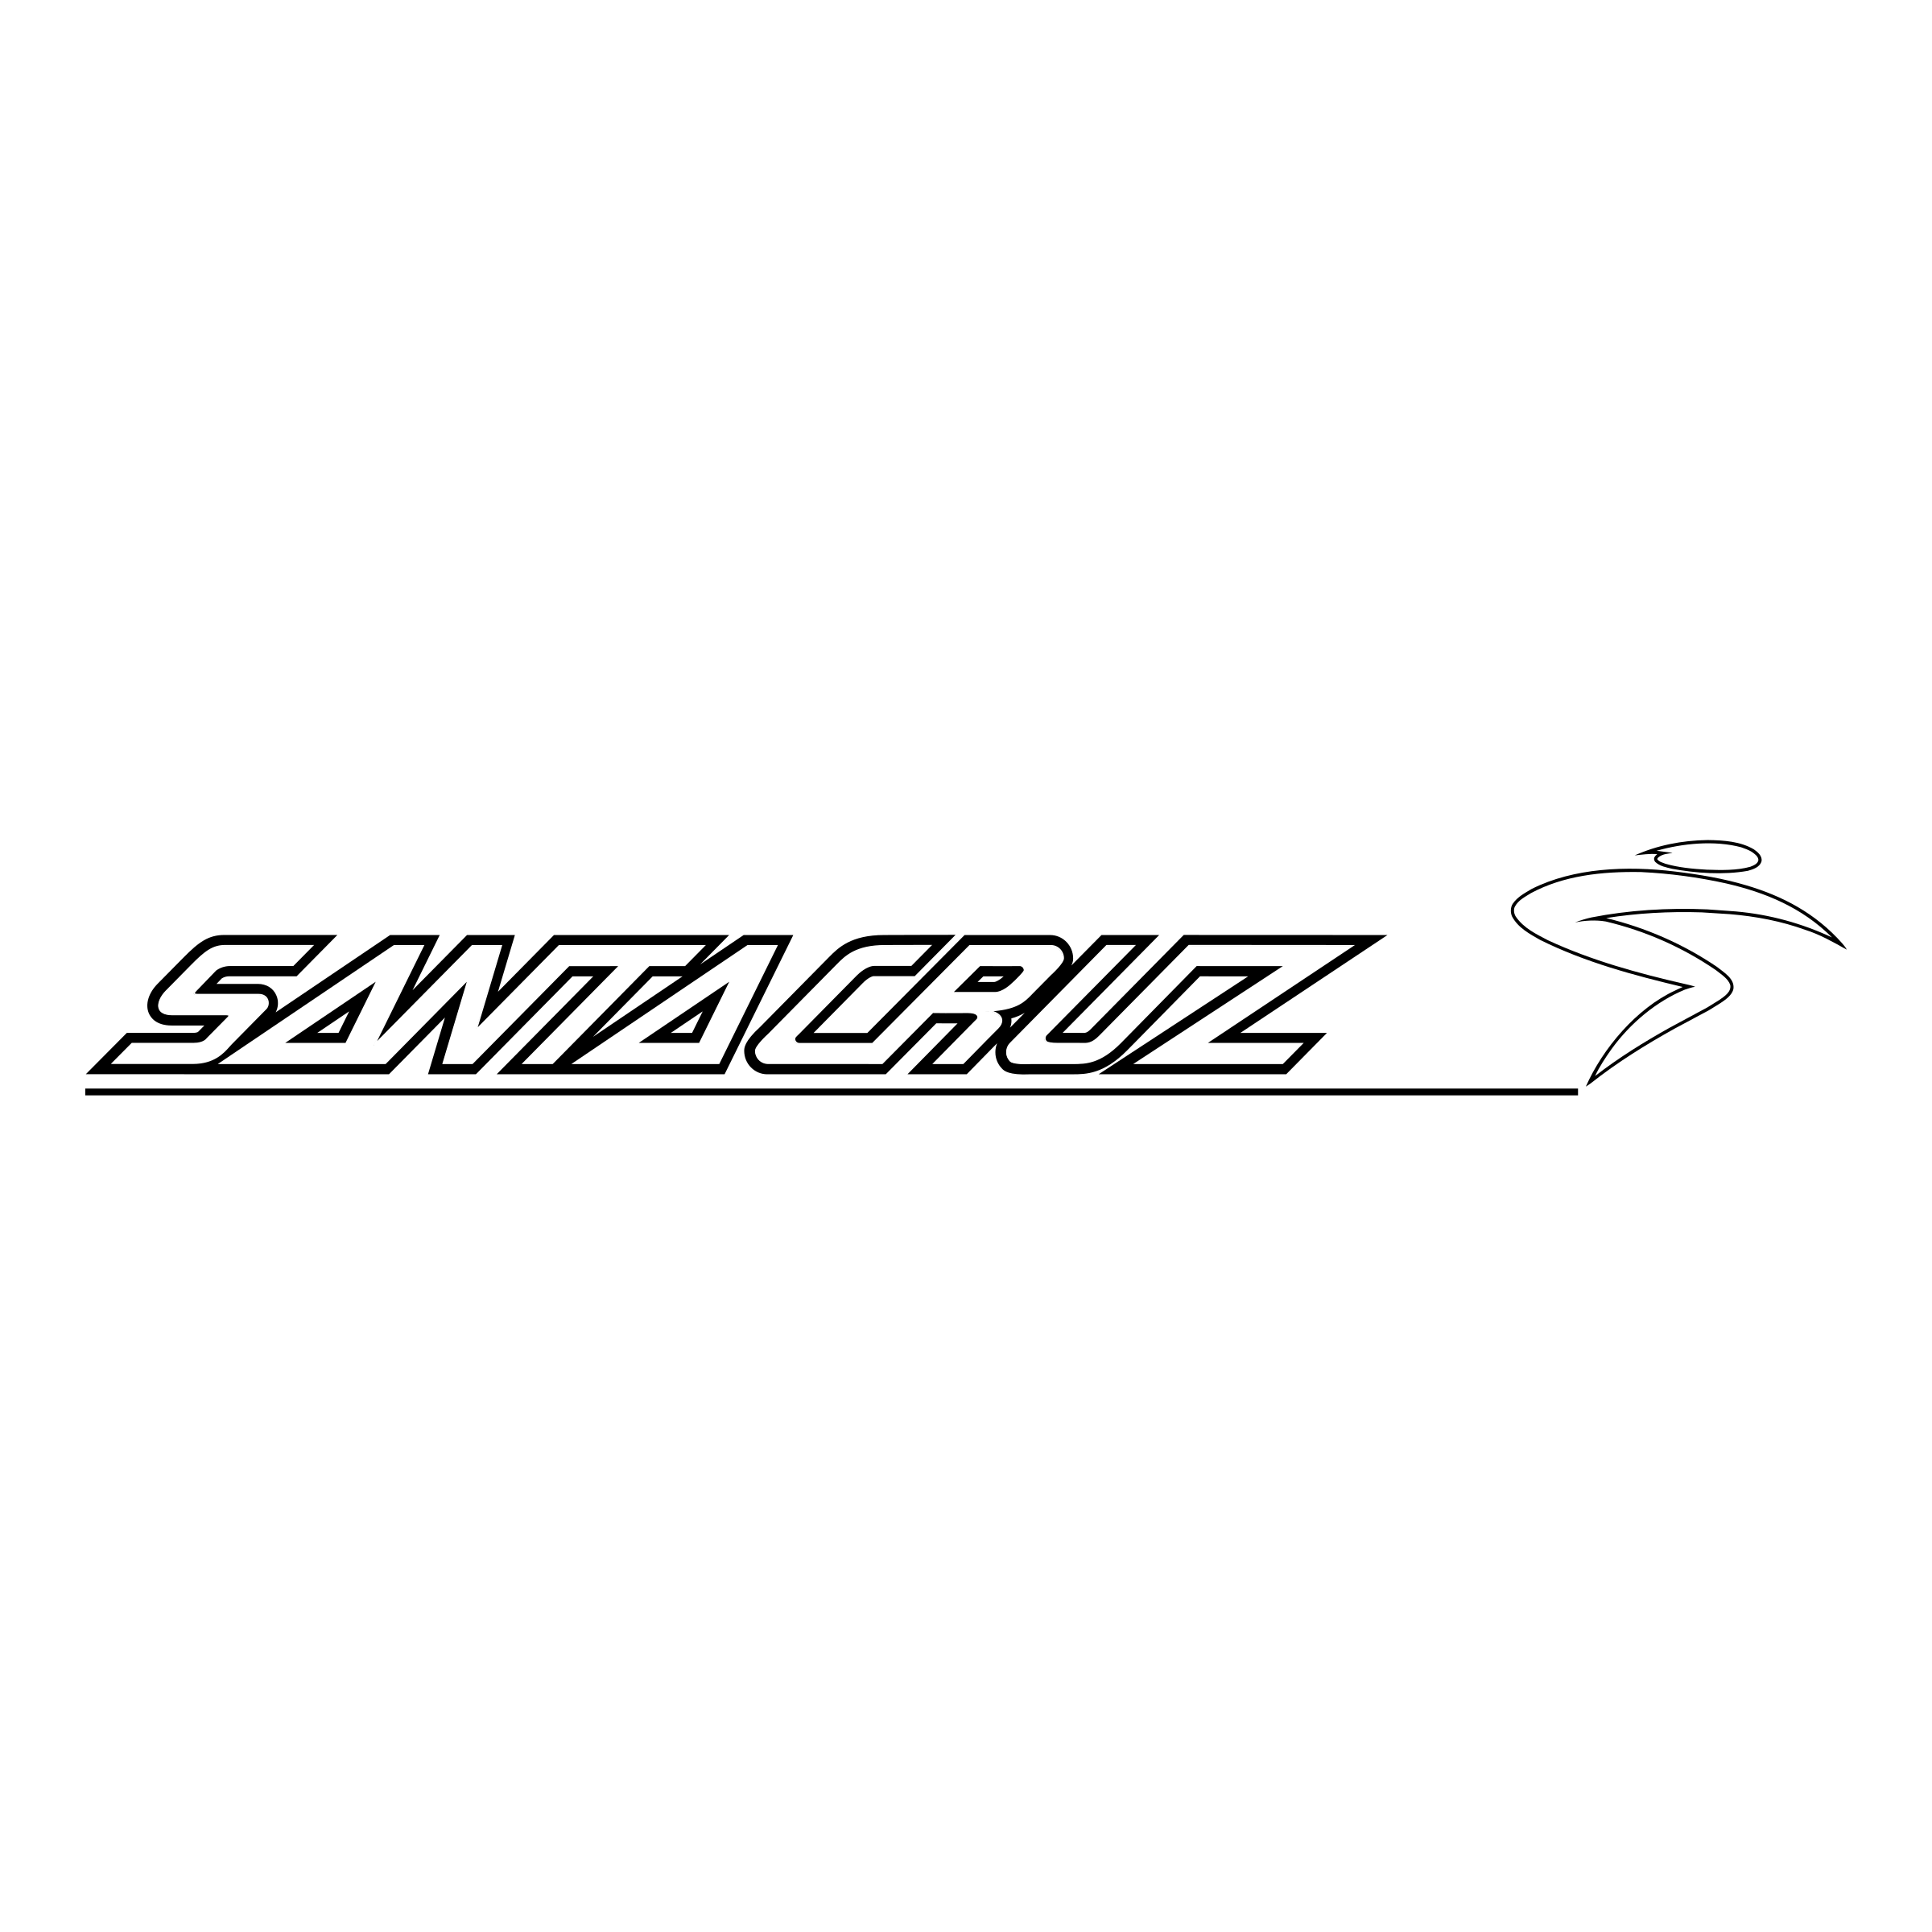 Santa Cruz MTB Logo - Santa Cruz Bicycles Logo PNG Transparent & SVG Vector - Freebie Supply